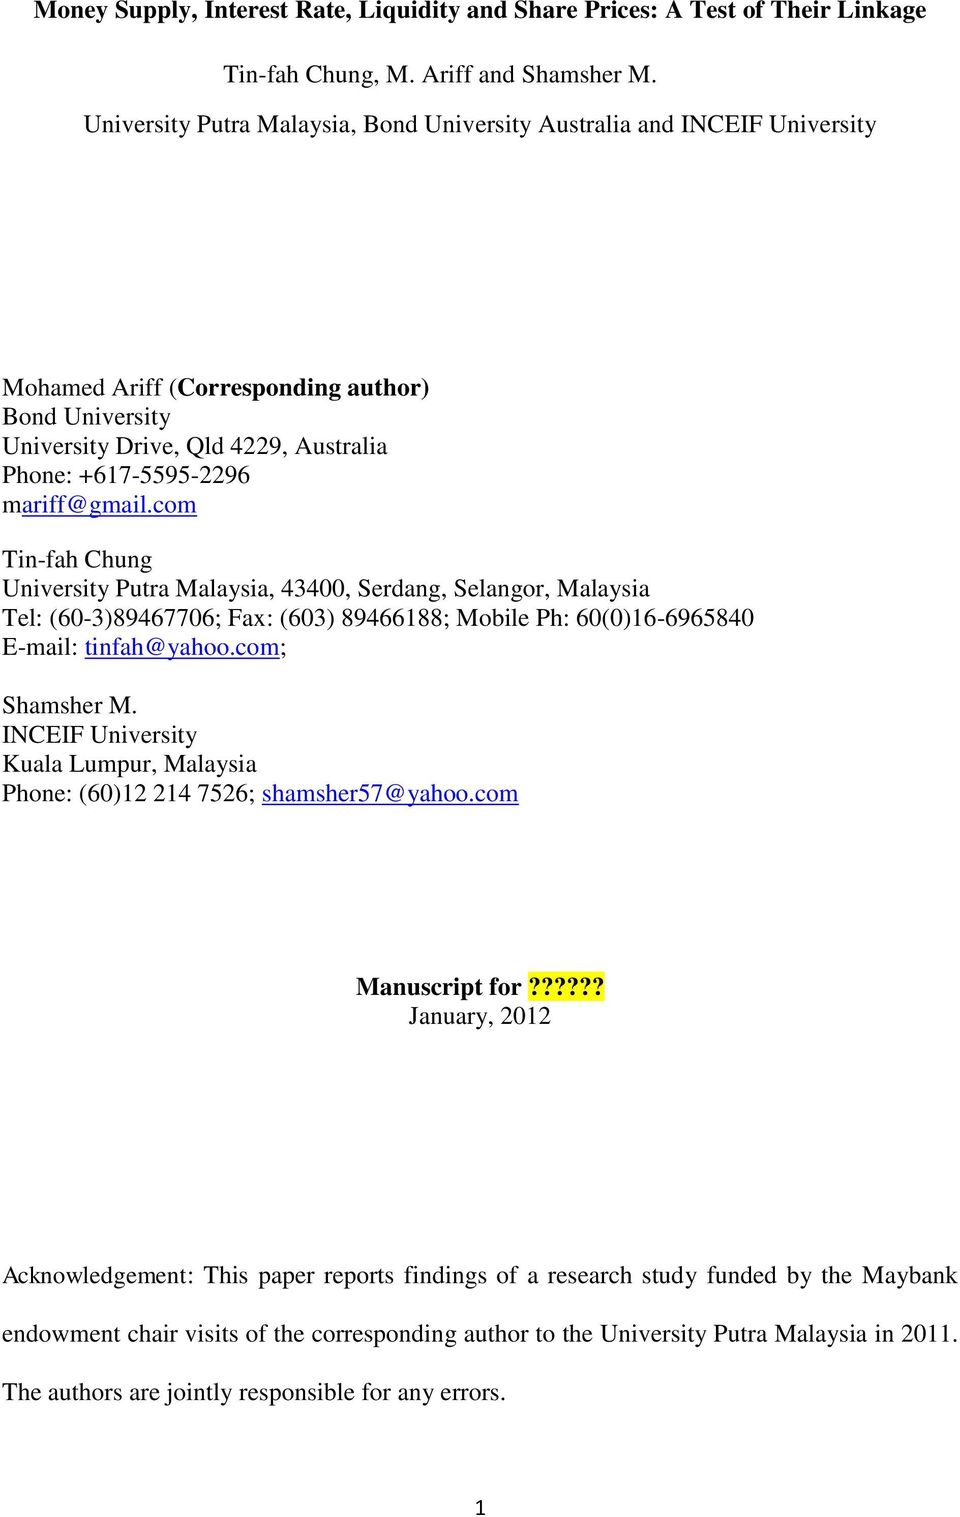 mariff@gmail.com Tin-fah Chung University Putra Malaysia, 43400, Serdang, Selangor, Malaysia Tel: (60-3)89467706; Fax: (603) 89466188; Mobile Ph: 60(0)16-6965840 E-mail: tinfah@yahoo.com; Shamsher M.